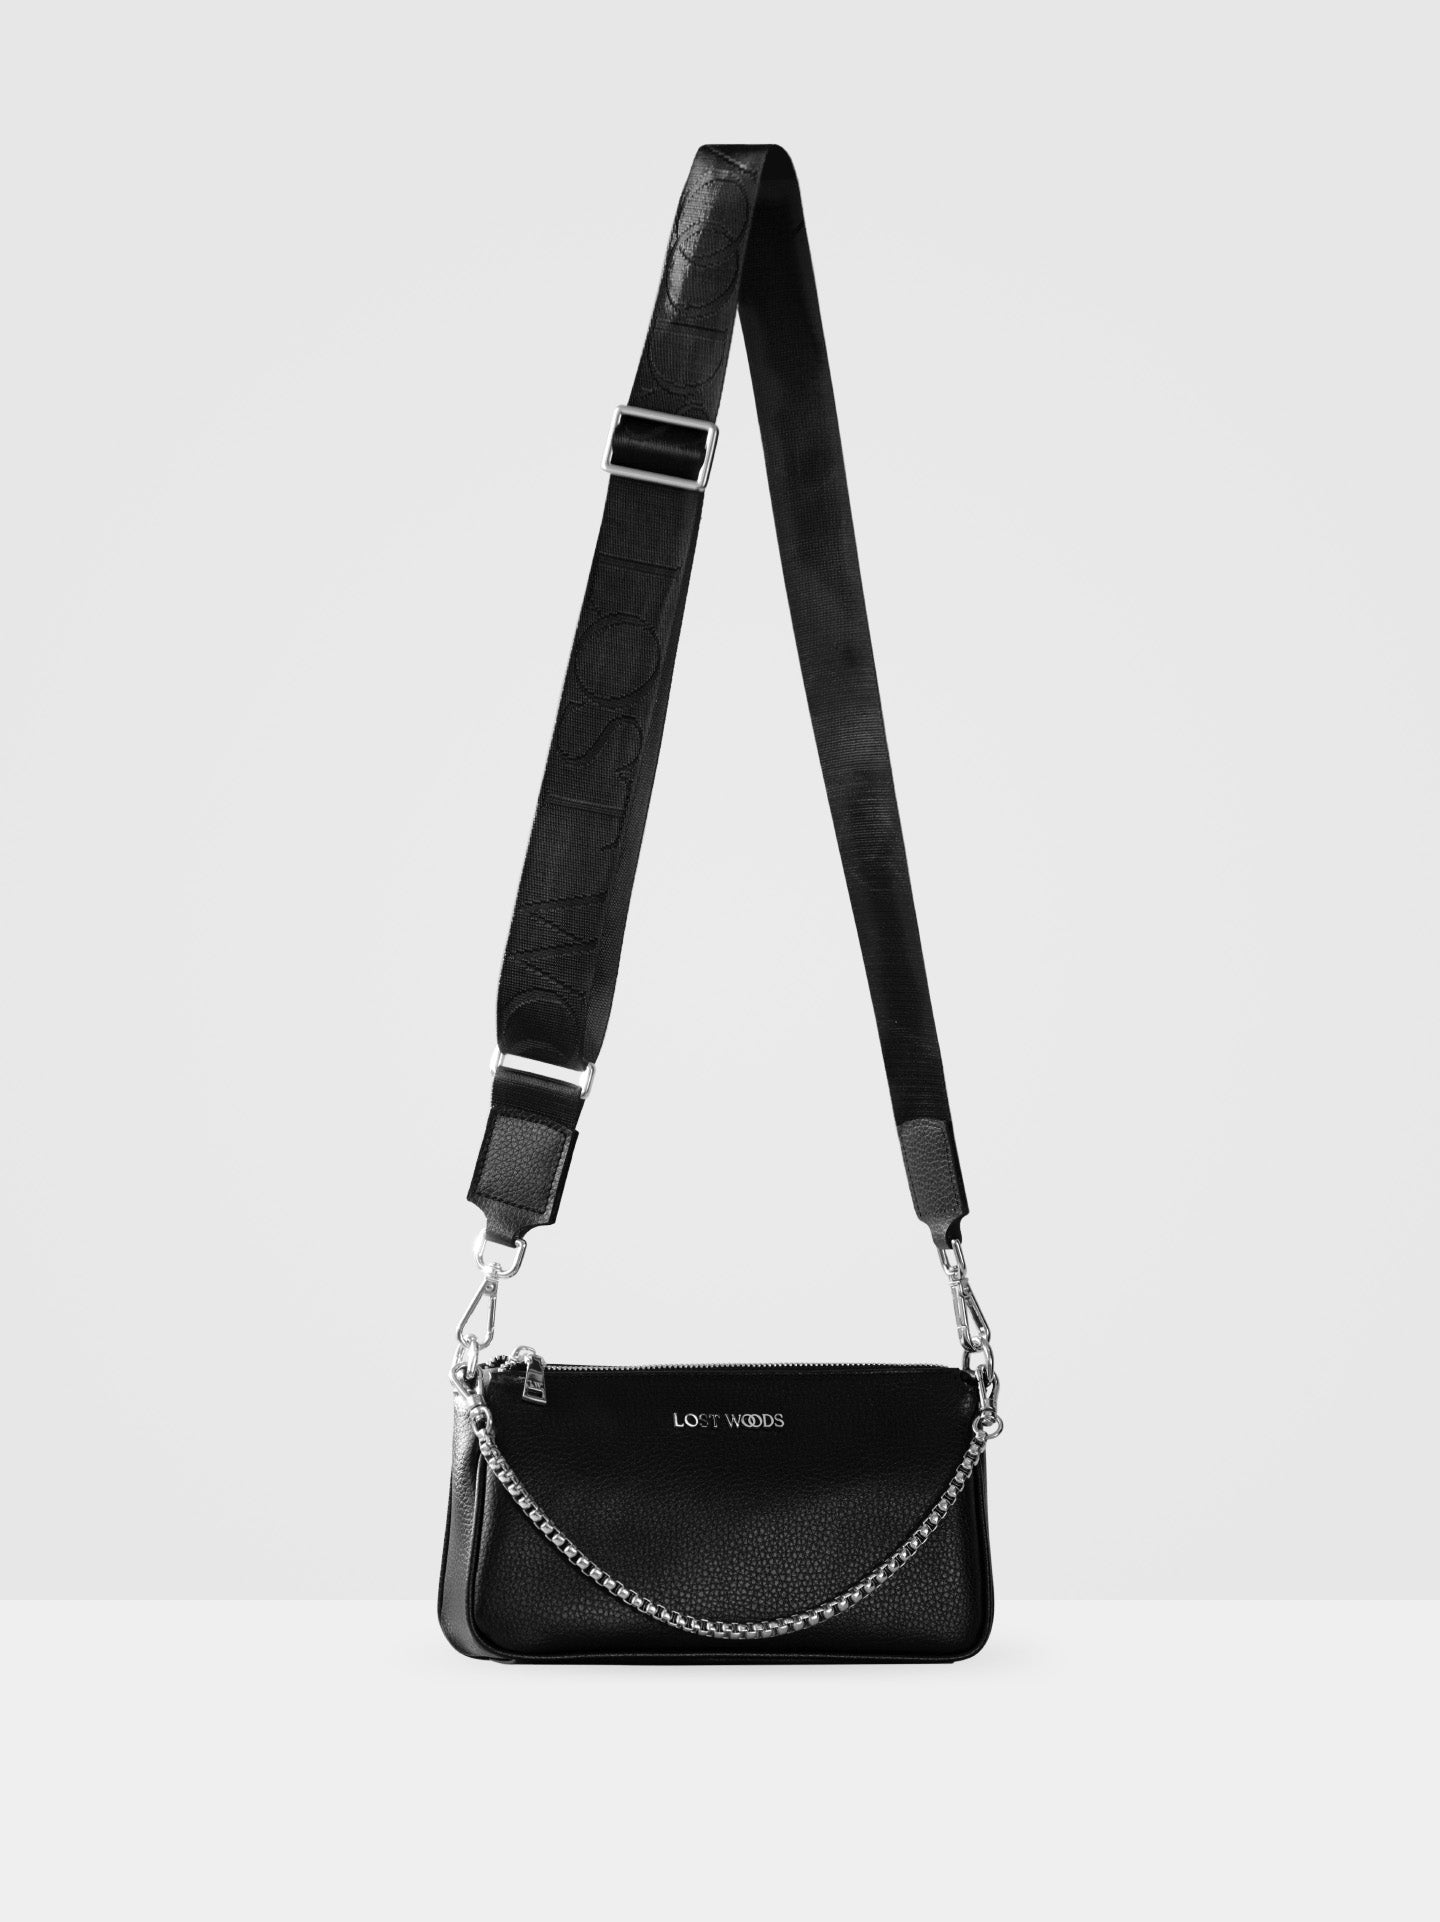 Silver Chain Bag Strap Removable For Handbag | SHEIN